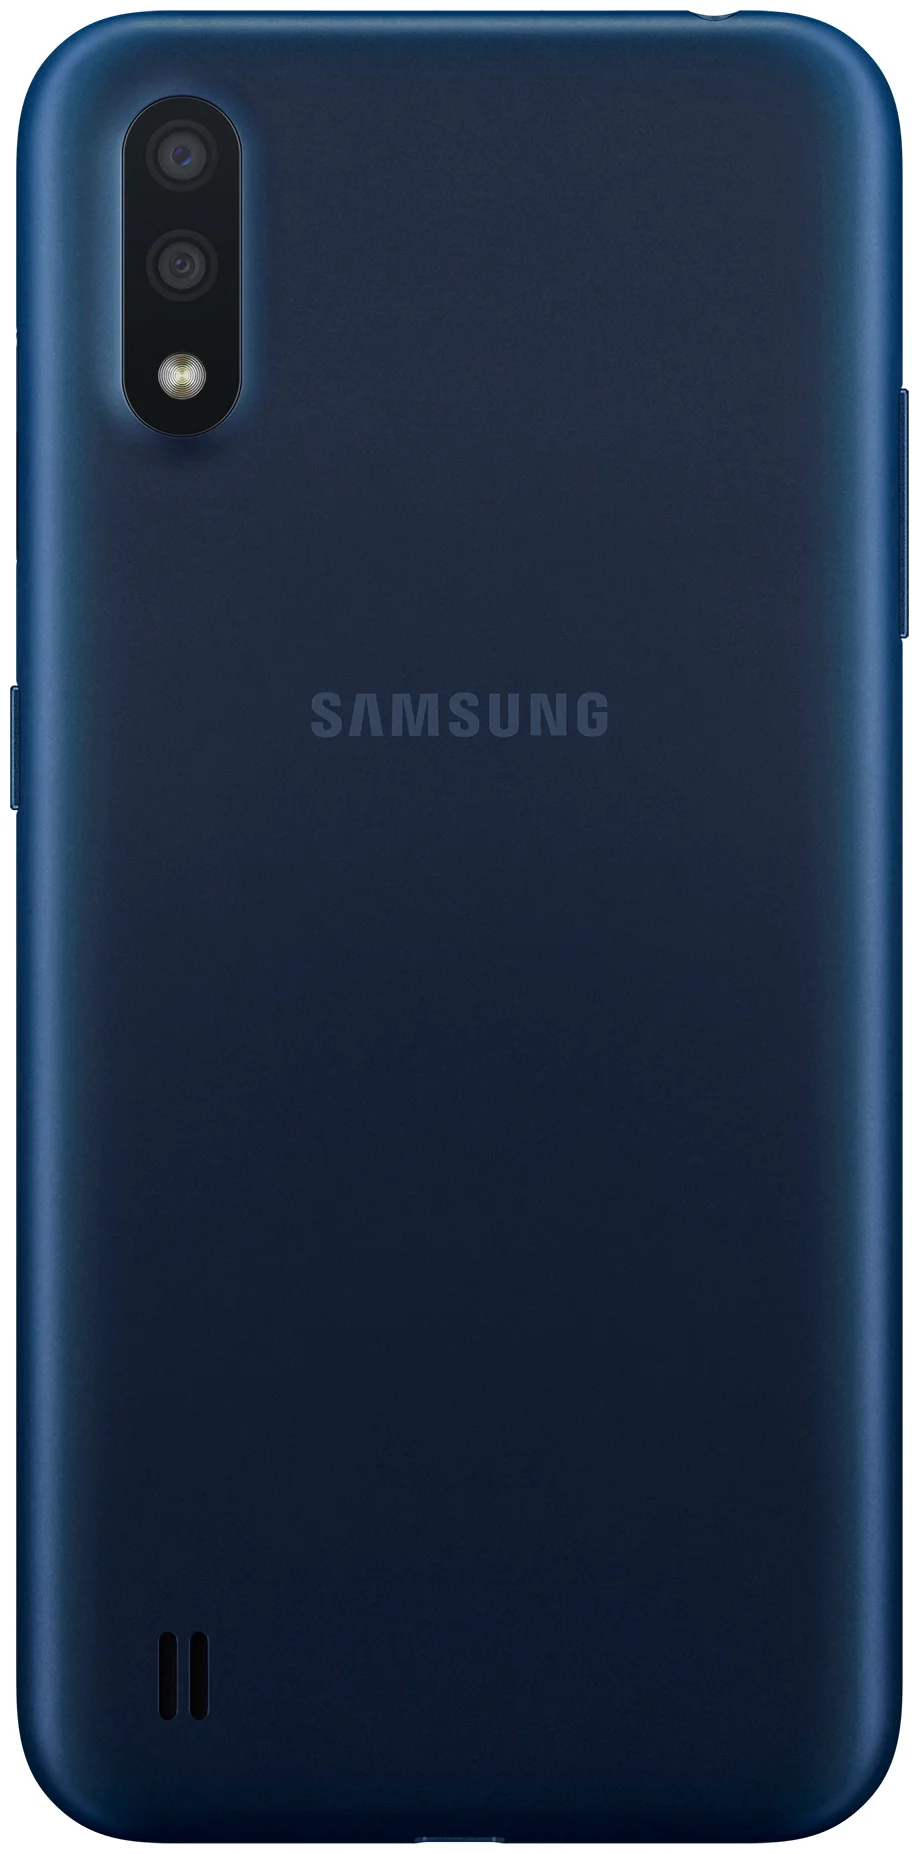 Samsung Galaxy A01 - операционная система: Android 10